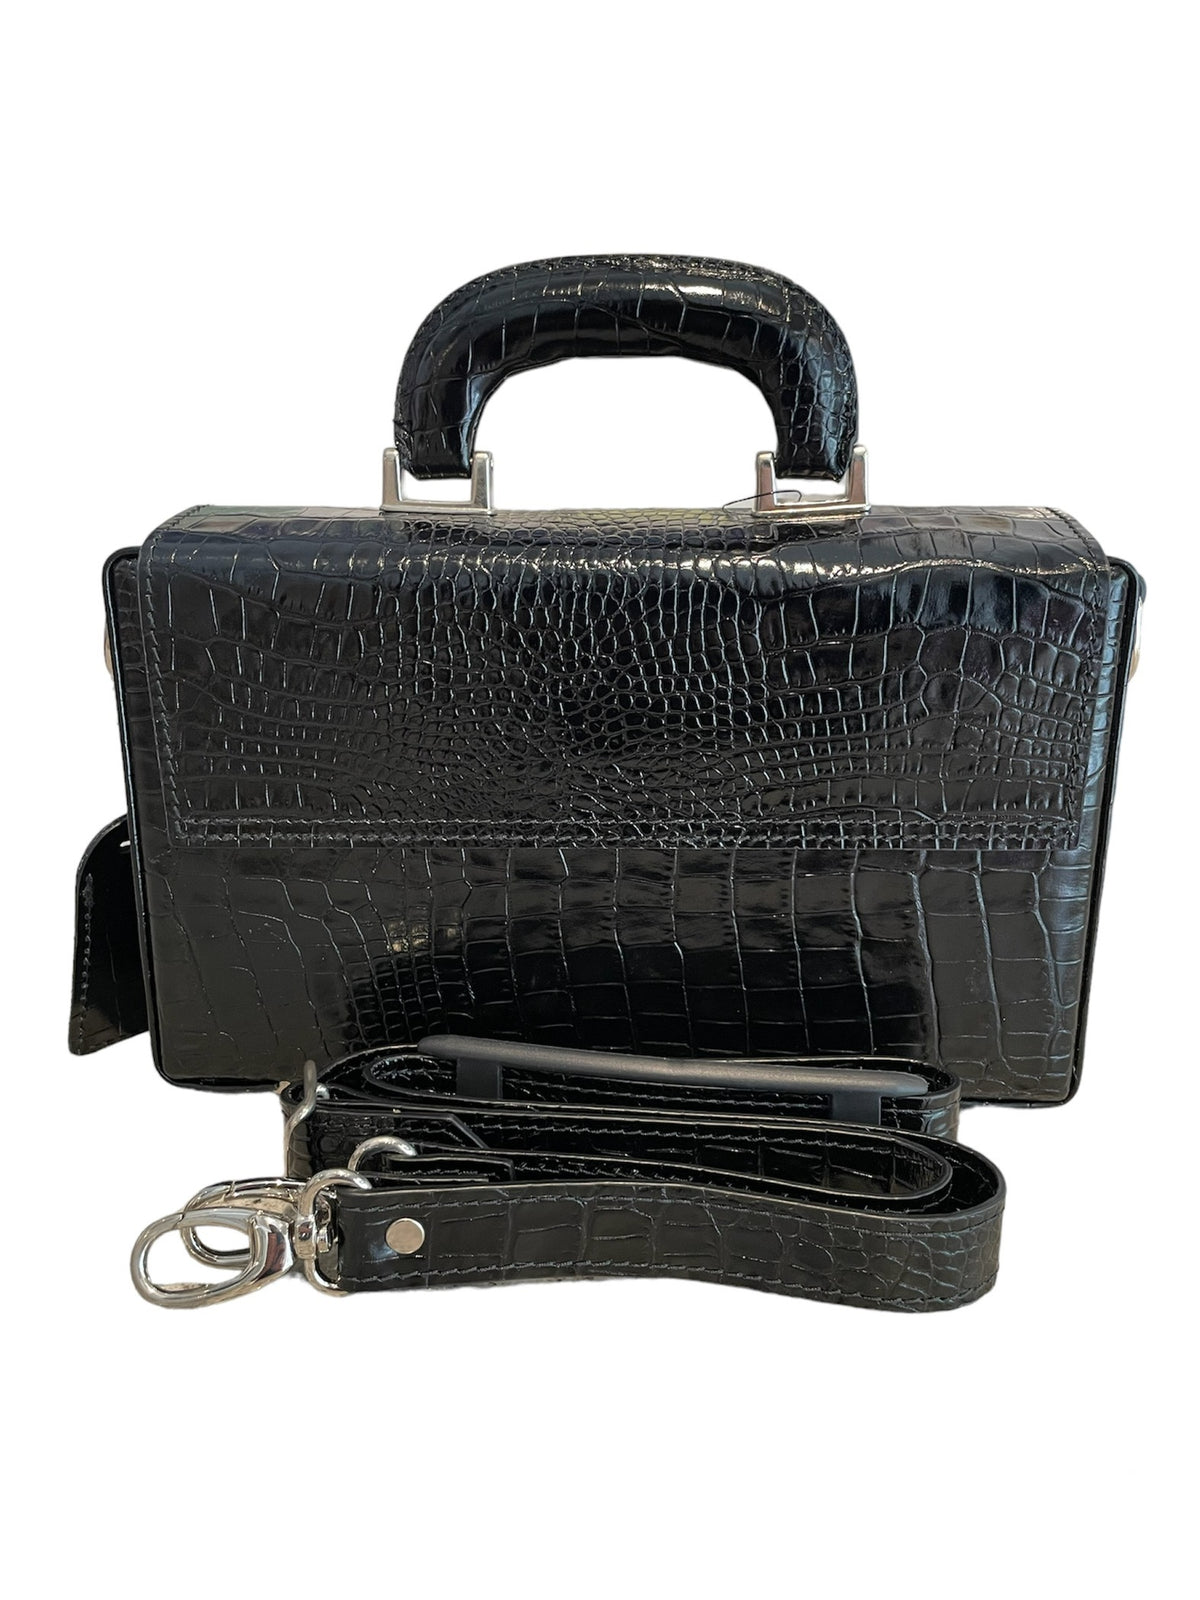 Elegant Briefcase BLACK COCCO PRINT Genuine leather with locks and shoulder strap